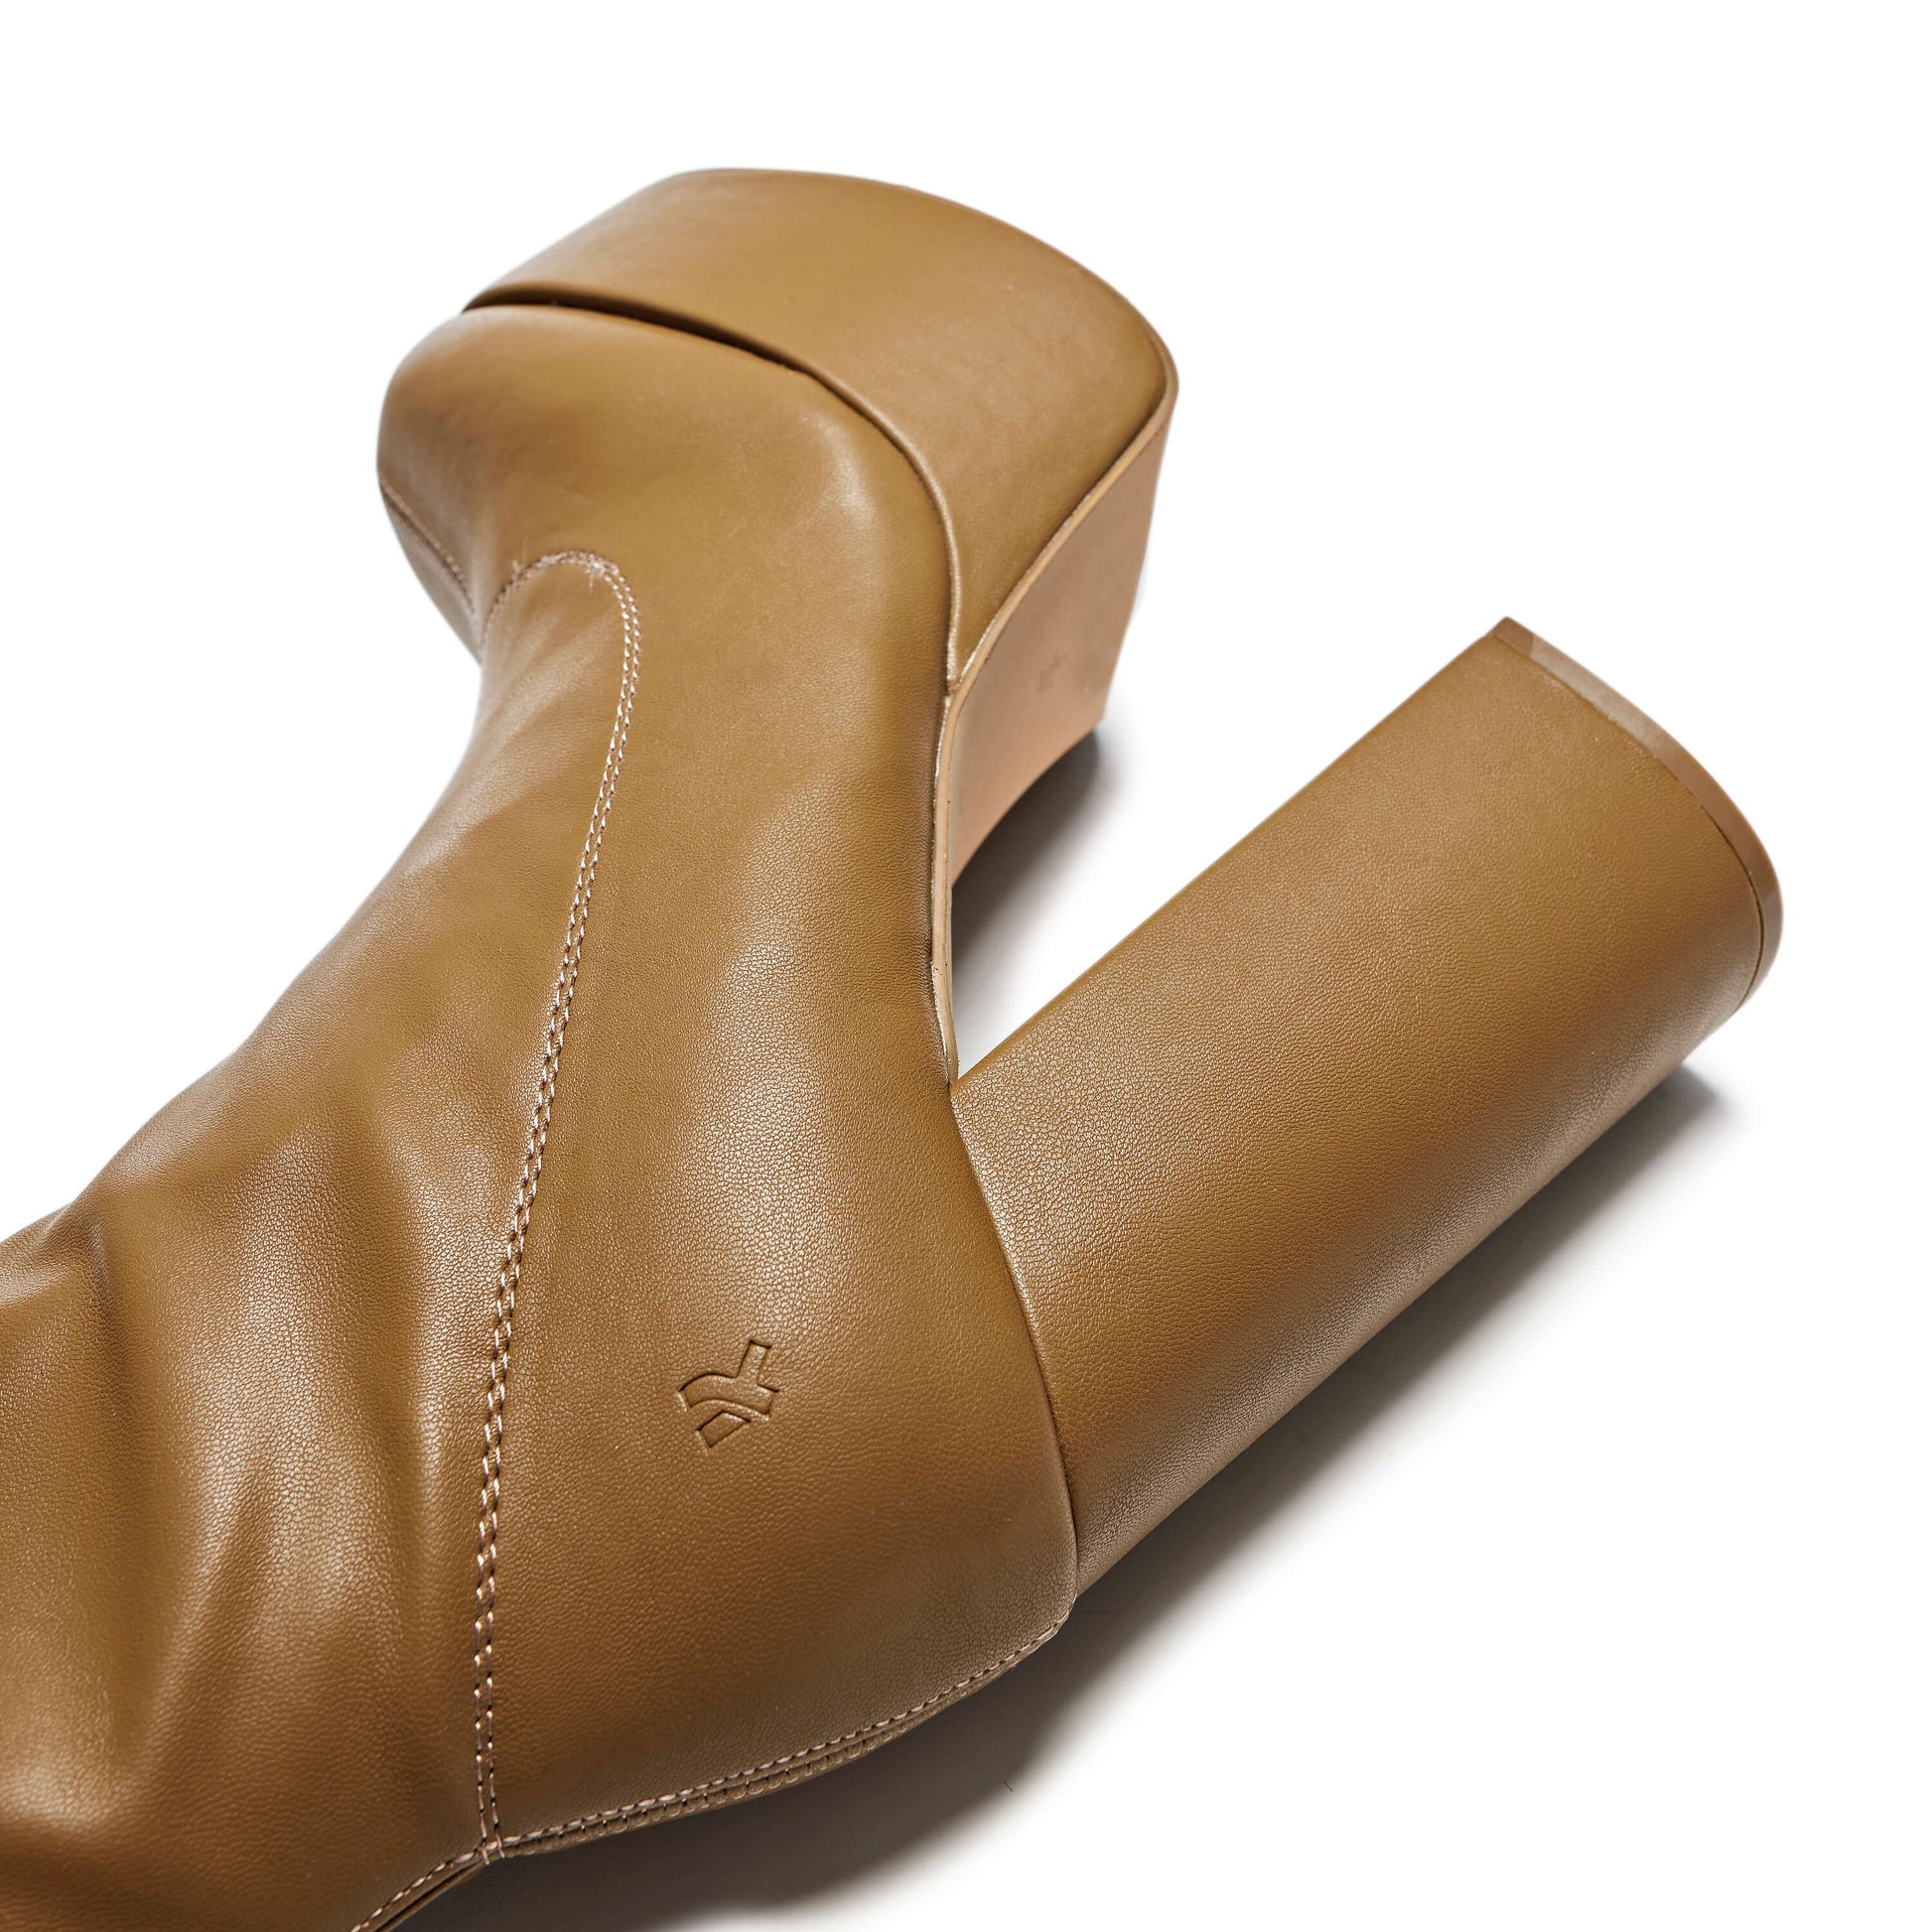 The Redemption Stretch Thigh High Boots - Khaki - Long Boots - KOI Footwear - Khaki - Model Detail View